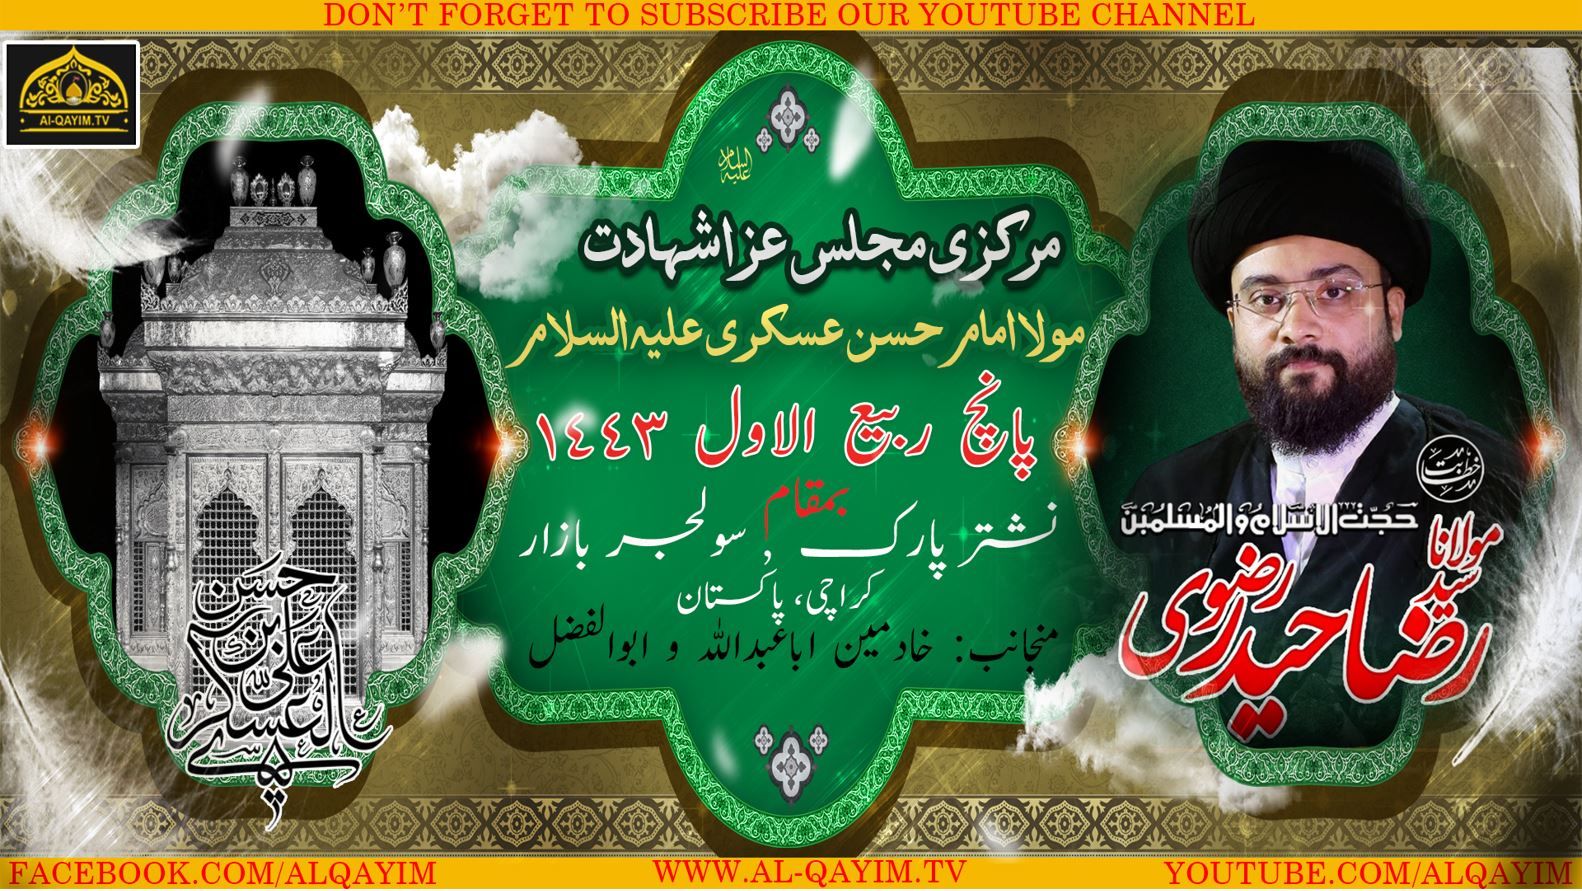 Majlis | Moulana Raza Haider Rizvi | 5th Rabi Awal 1443/2021 - Nishtar Park Solider Bazar - Karachi